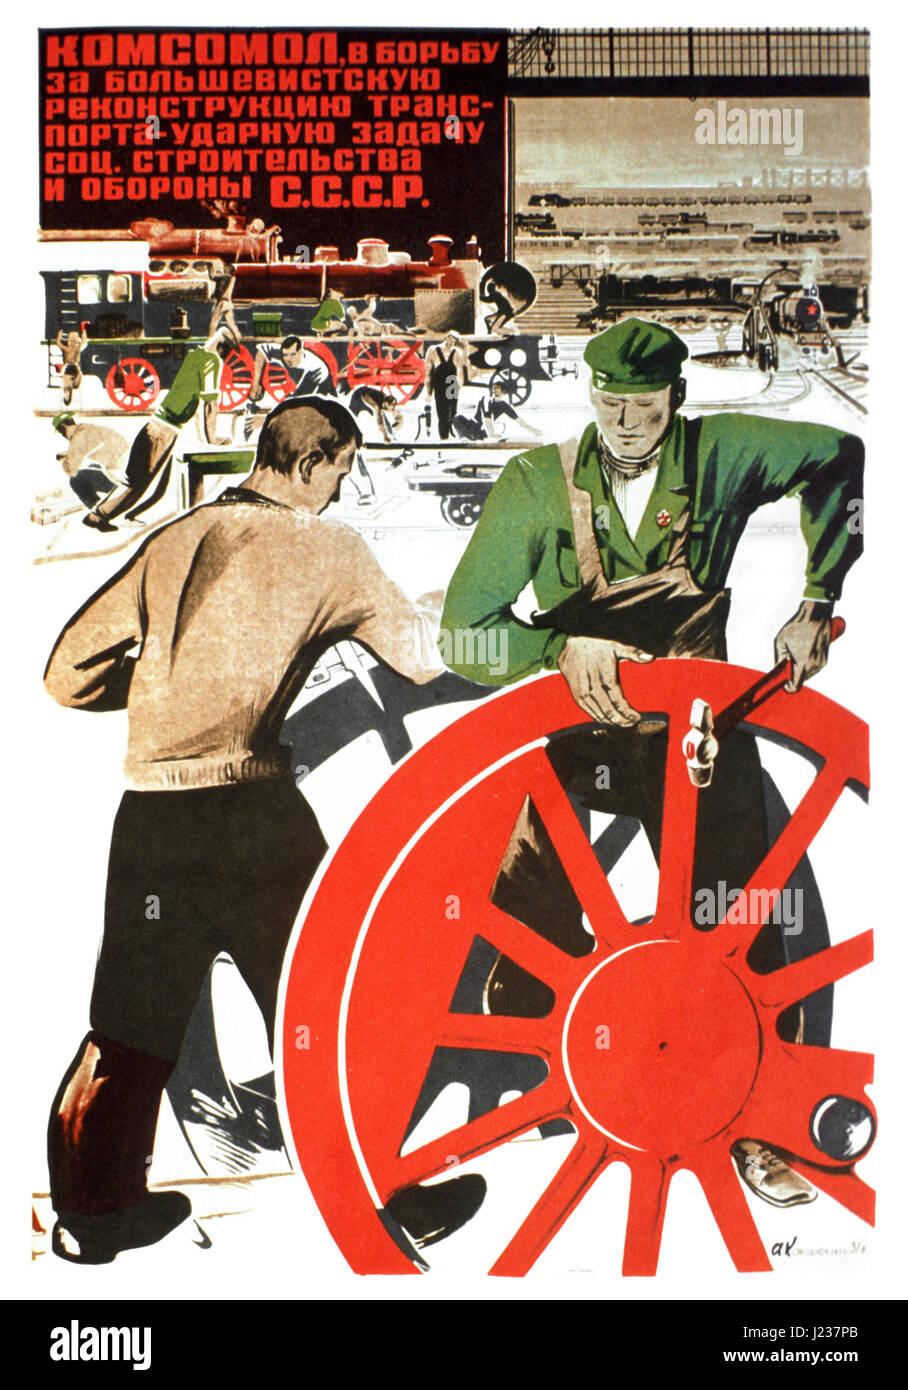 Soviet propaganda poster with a slogan: 'Komsomol members fight for the Bolshevik reconstruction of transport - main socialist goal of the USSR's construction and defense' by Alexei Kokorekin. Stock Photo